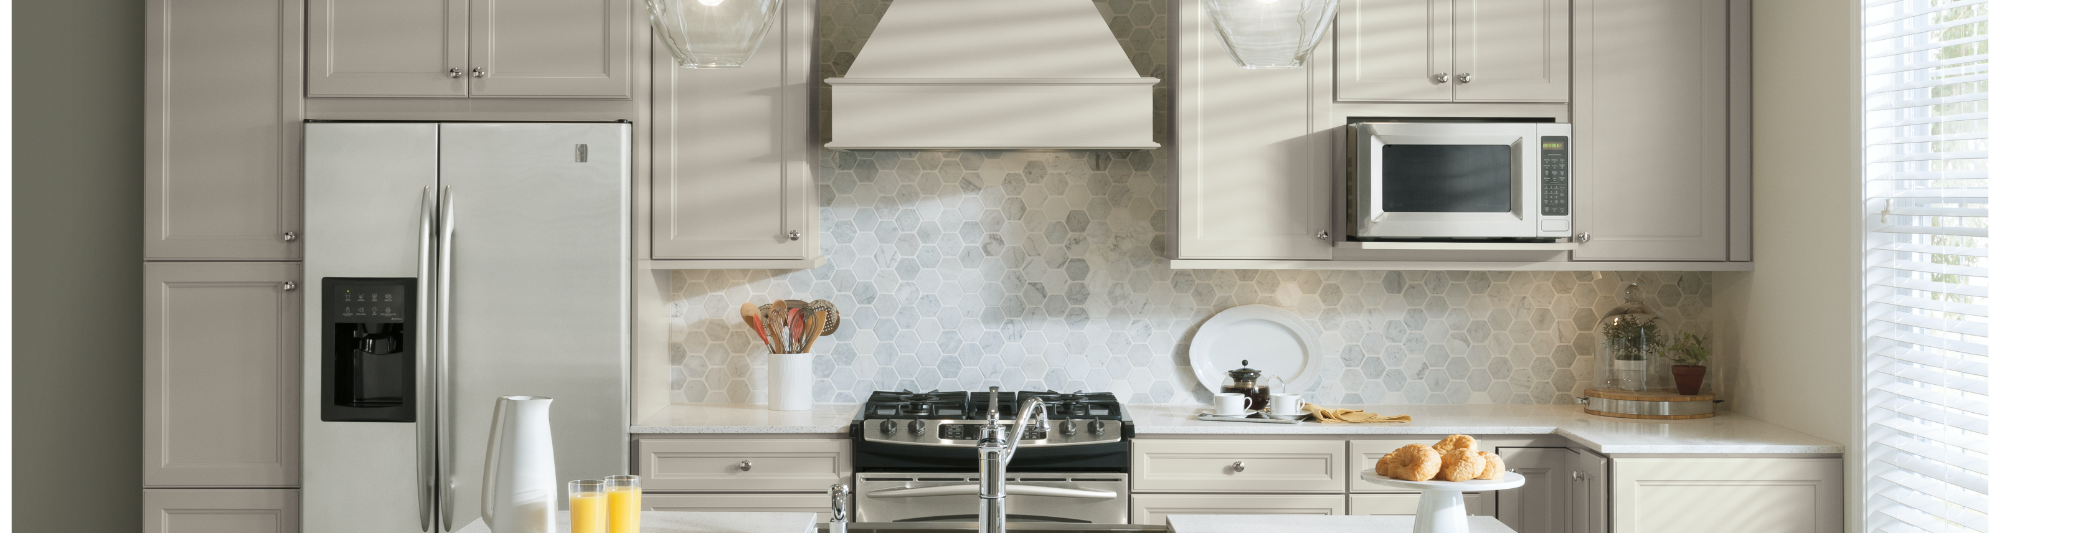 White kitchen with hexagon backsplash